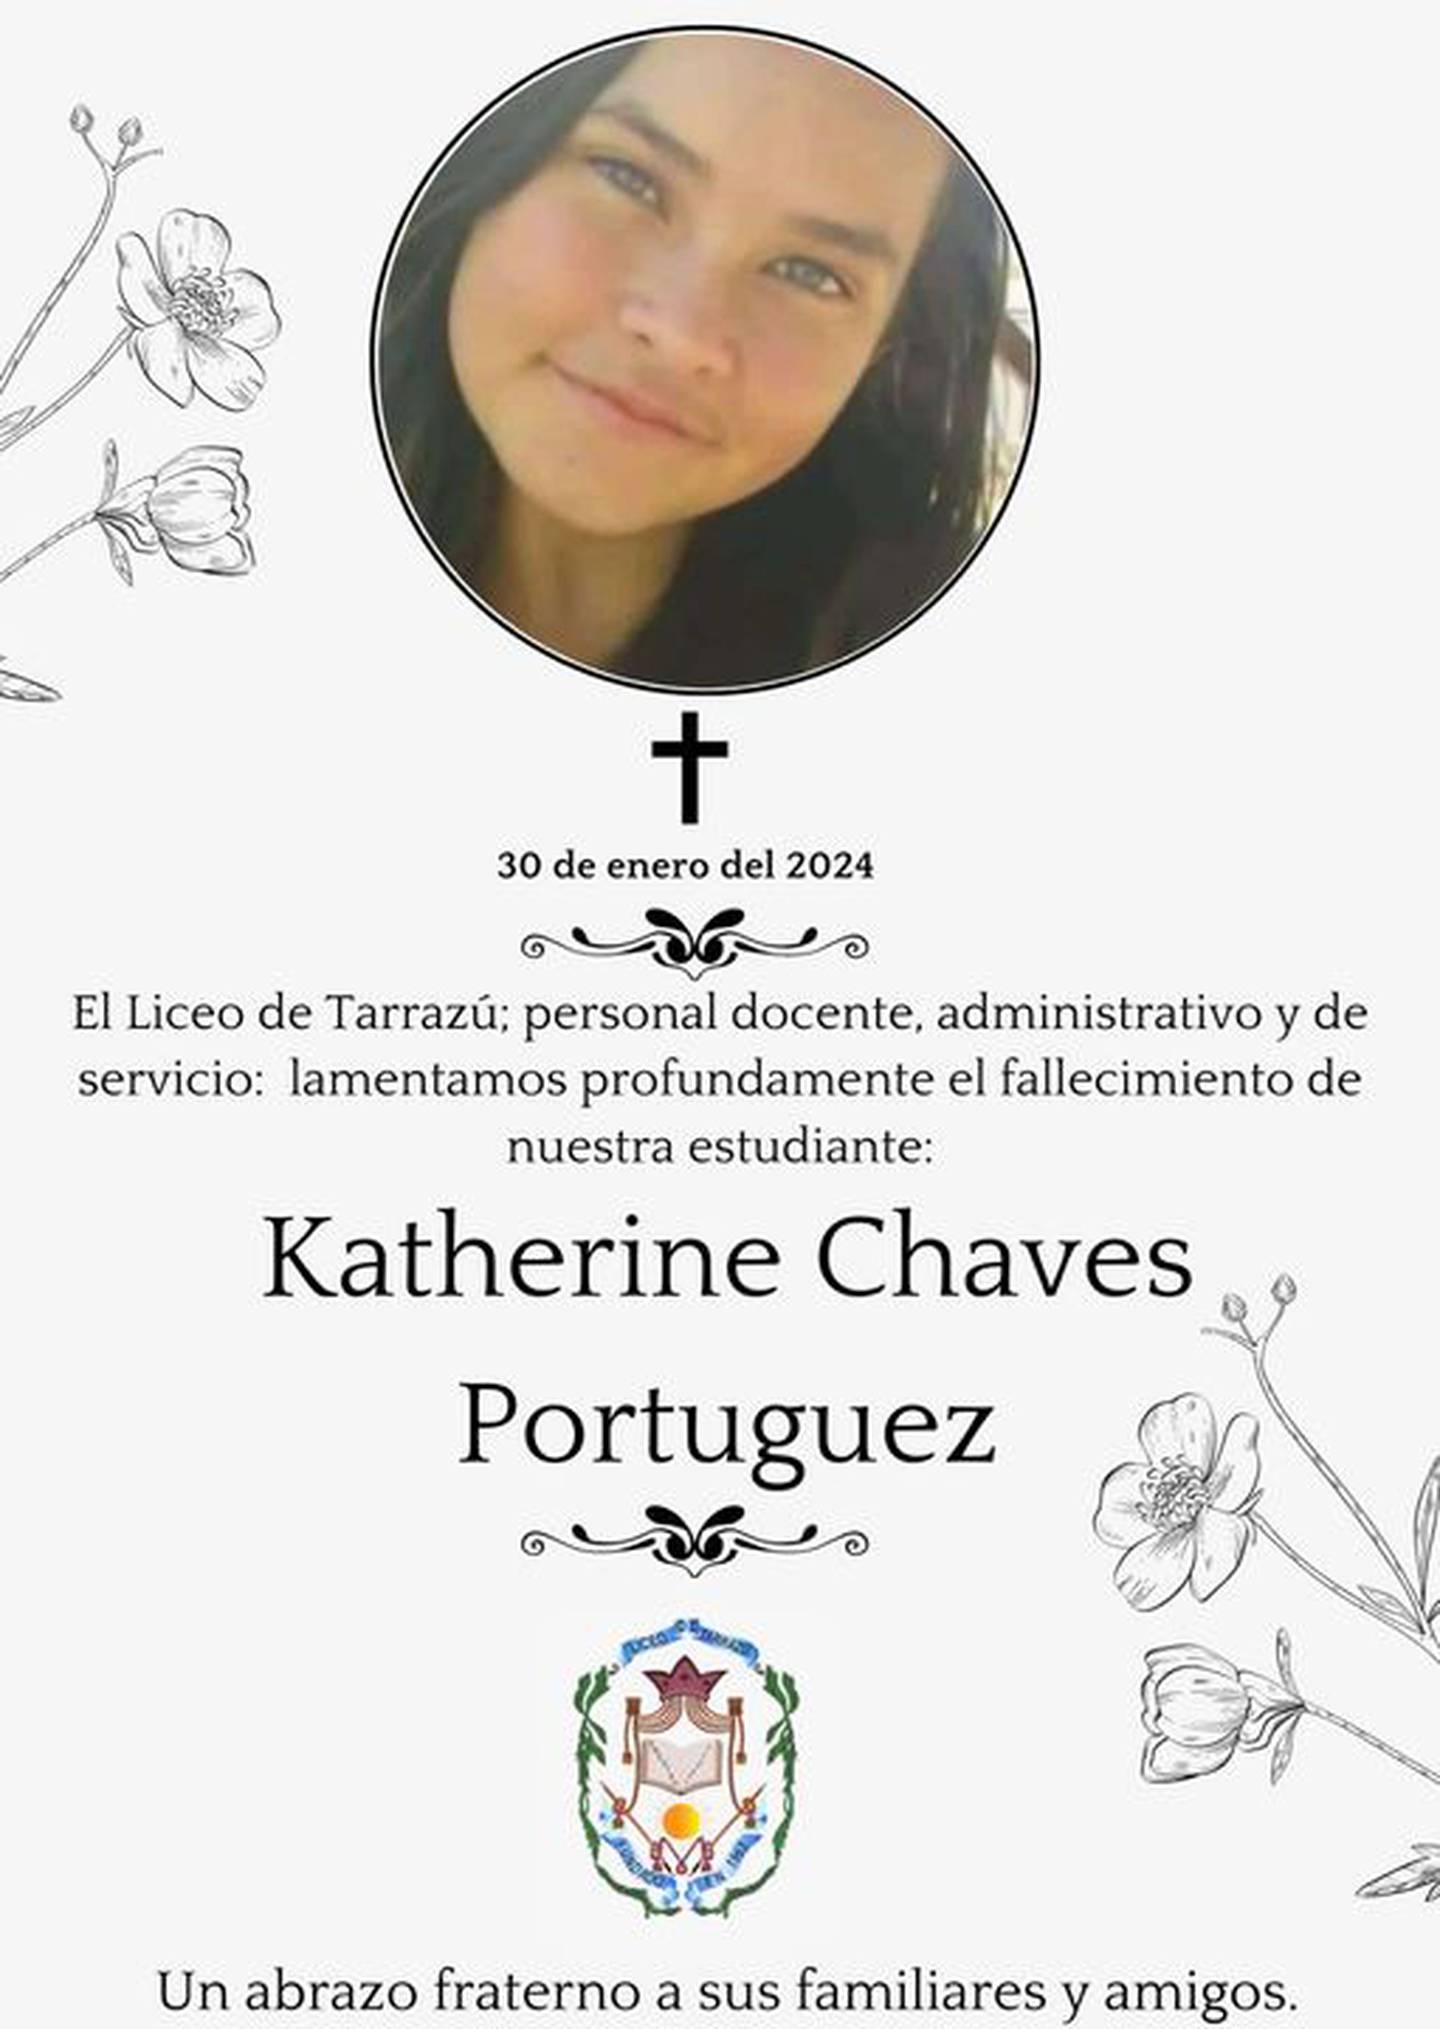 Katherine Chaves Portuguez, fallecida en La Tagada